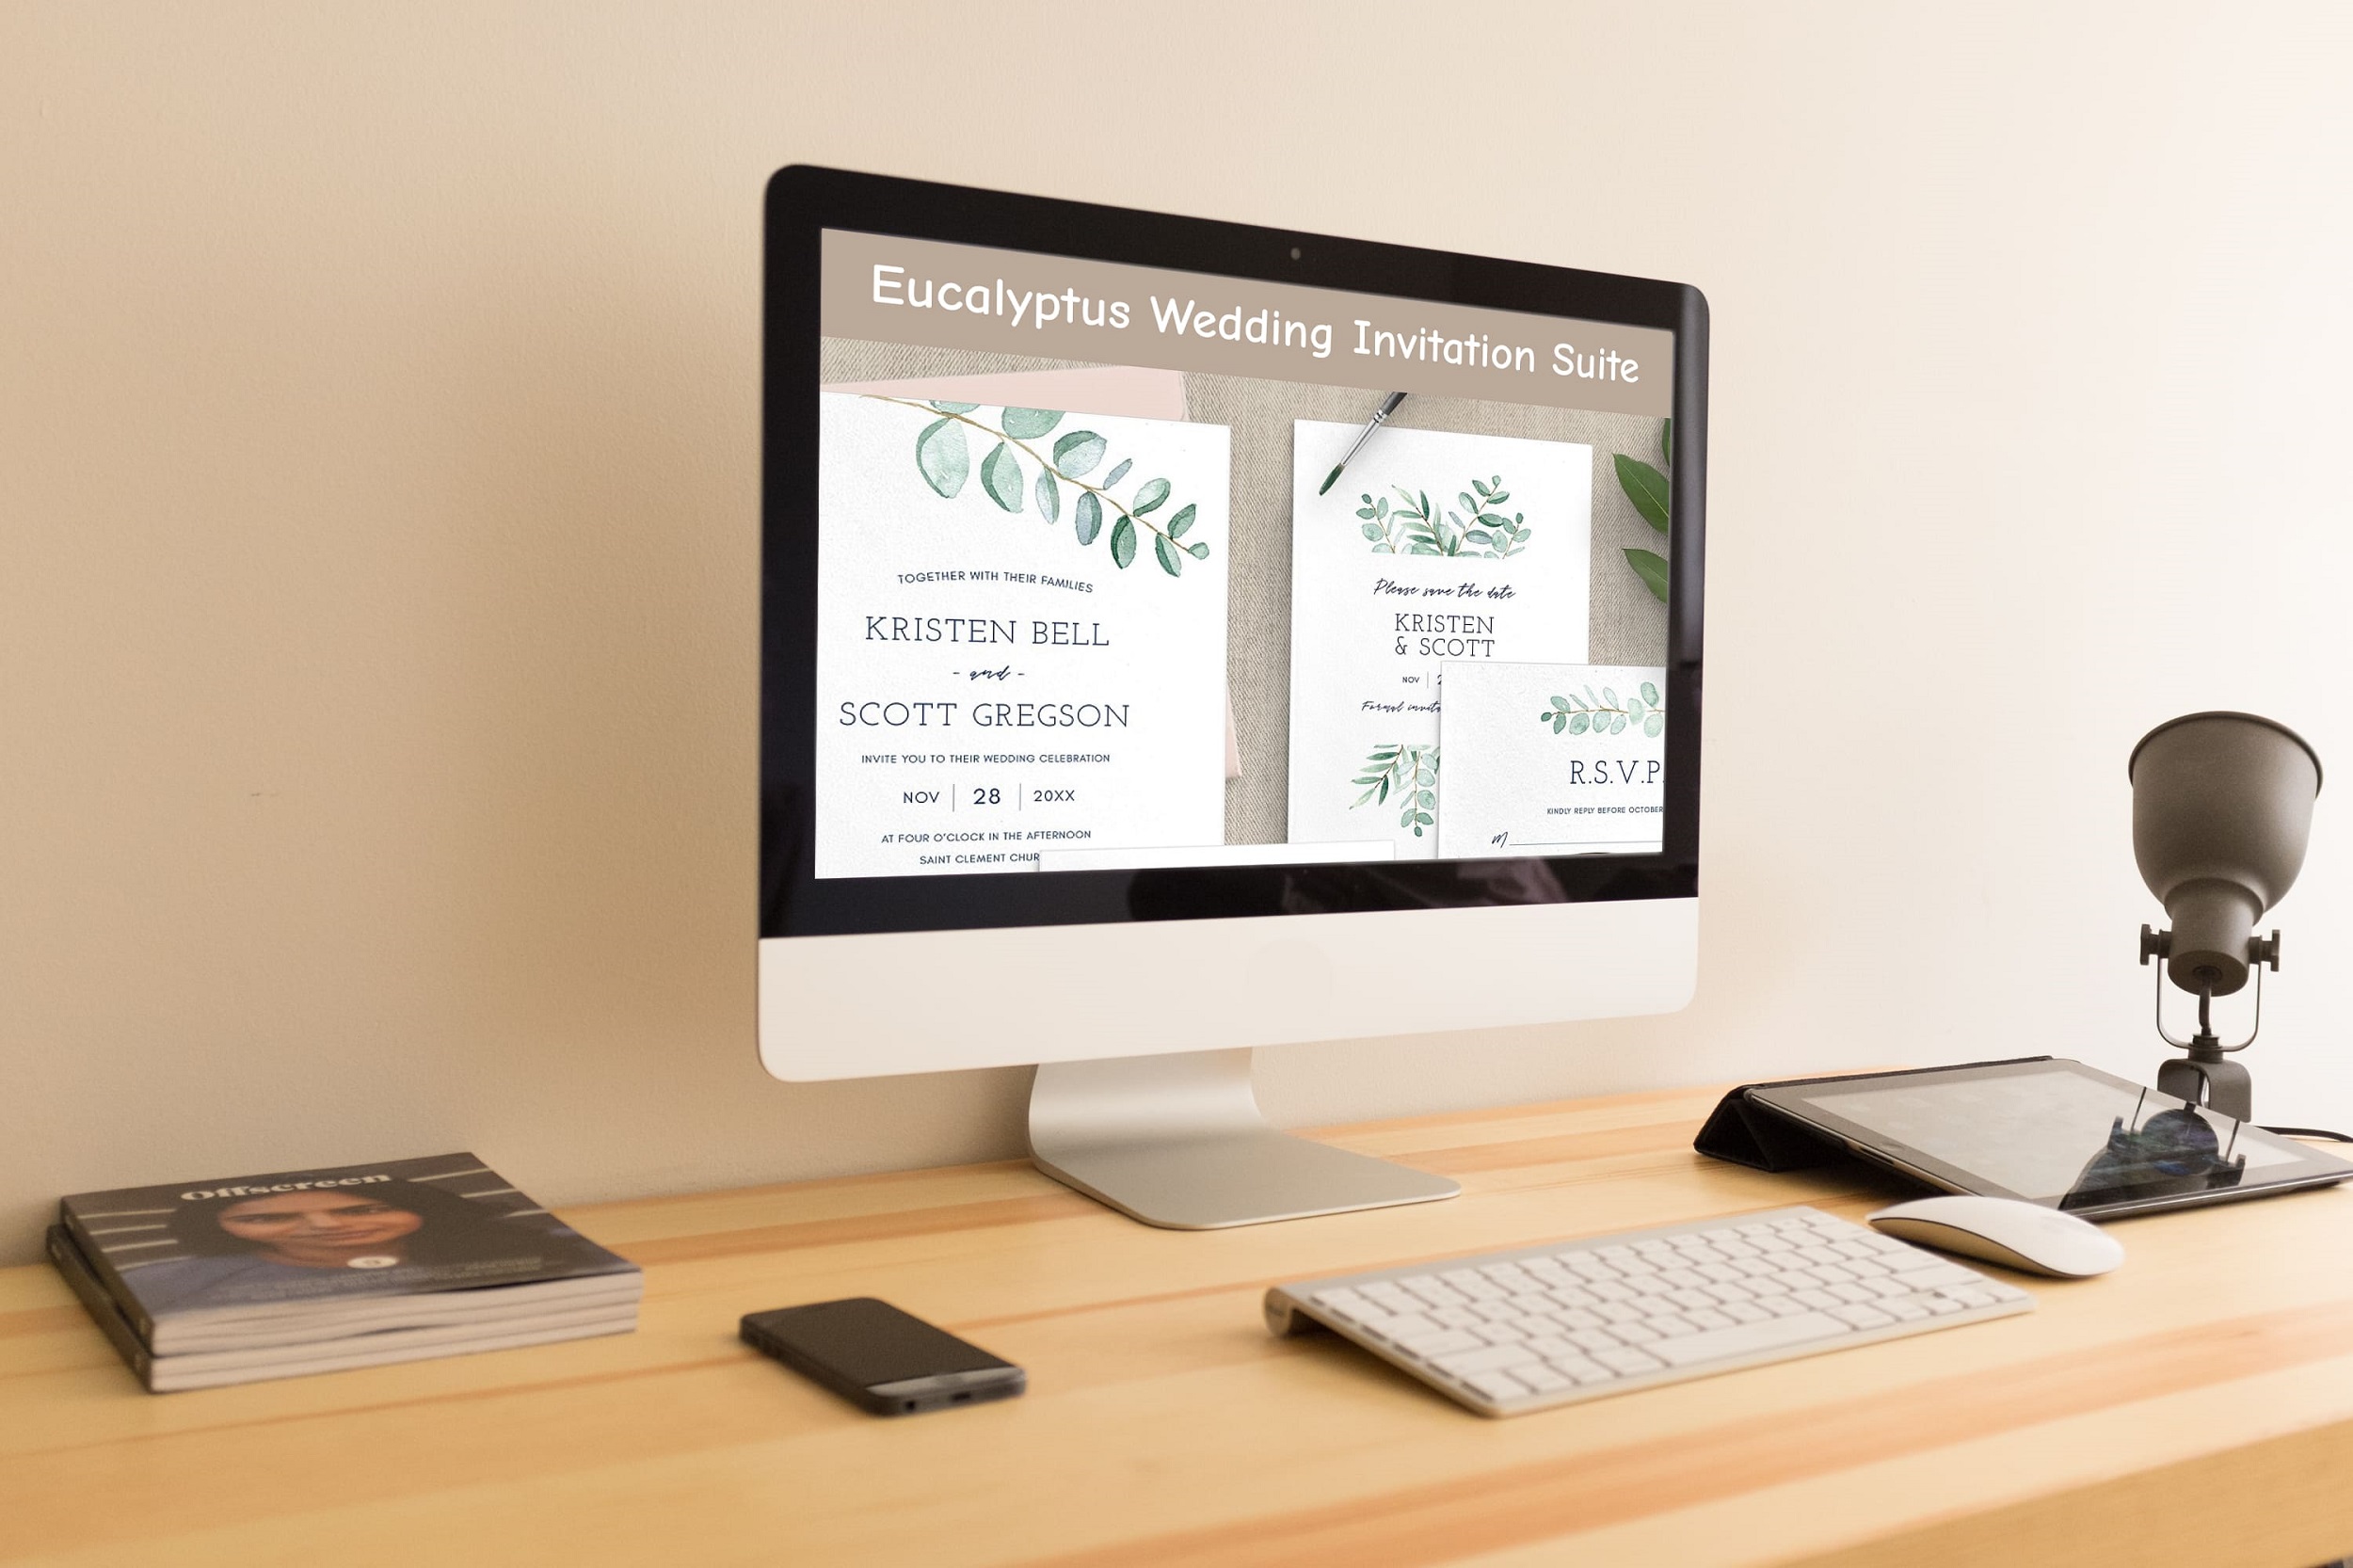 Eucalyptus Wedding Invitation Suite desktop mockup.